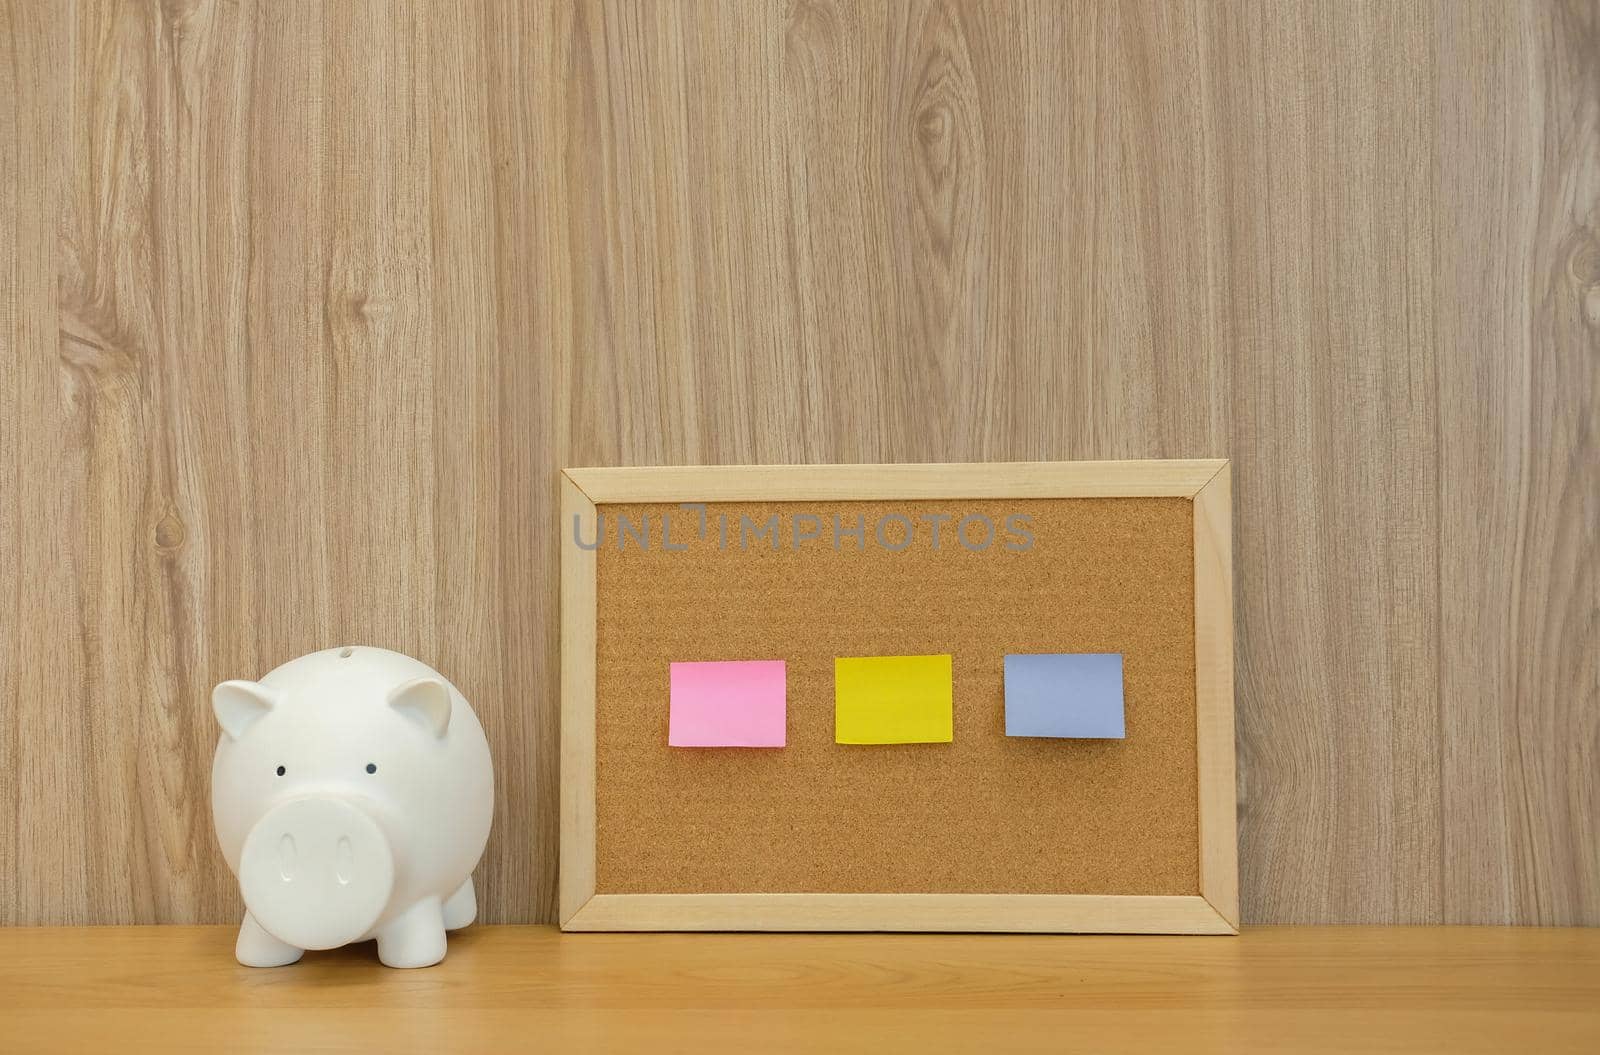 sticky notes paper reminder on cork board & piggy bank on wooden desk. money saving finance investment concept